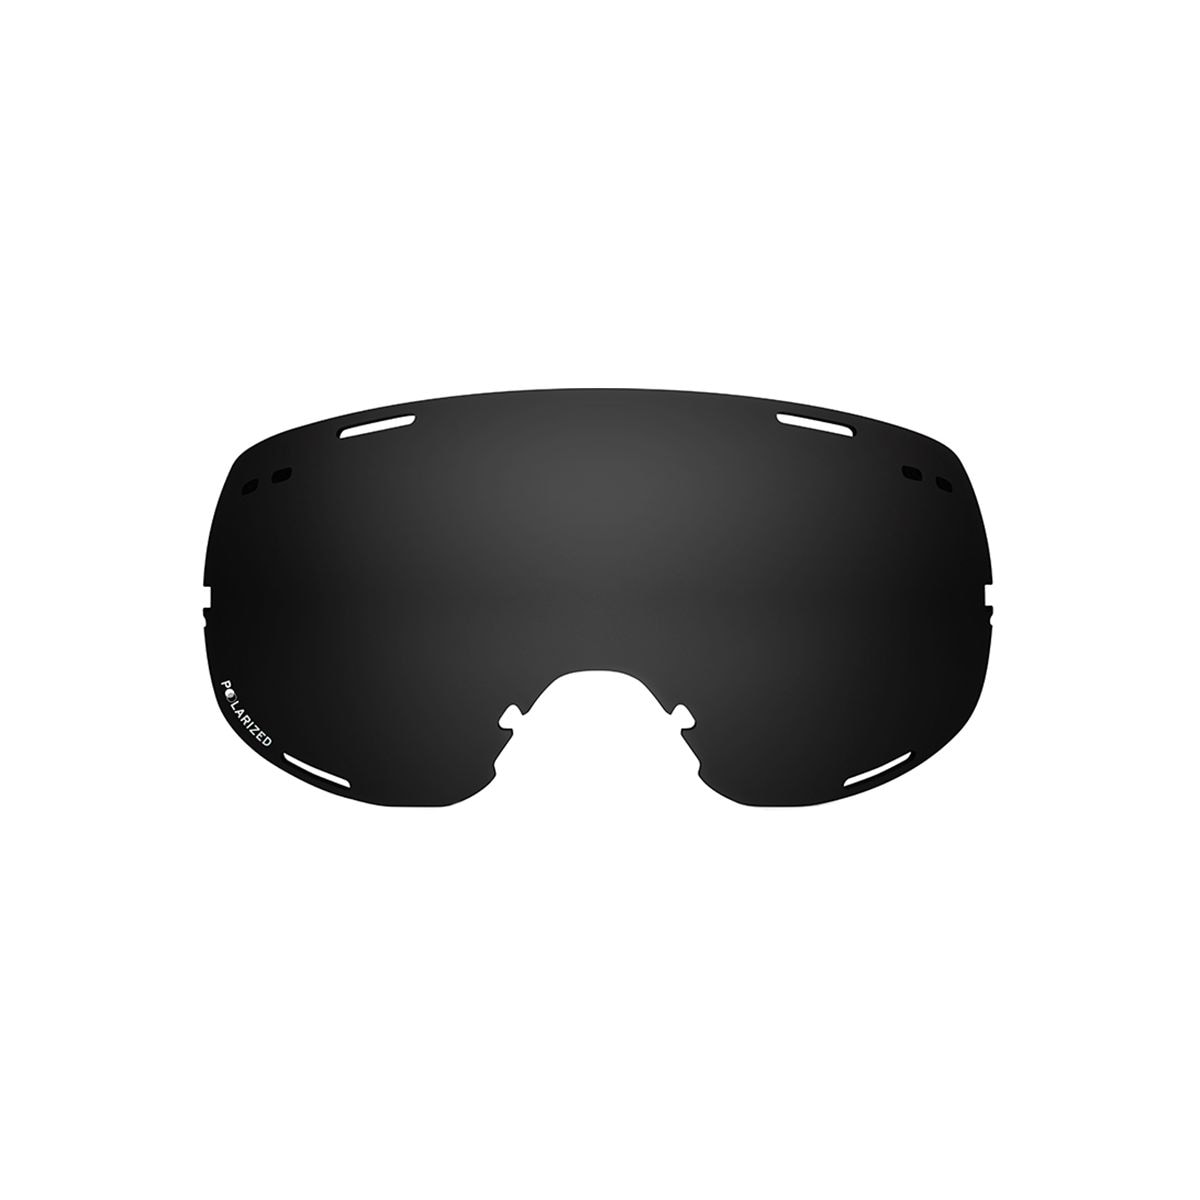 Zeal Fargo Goggles Replacement Lens